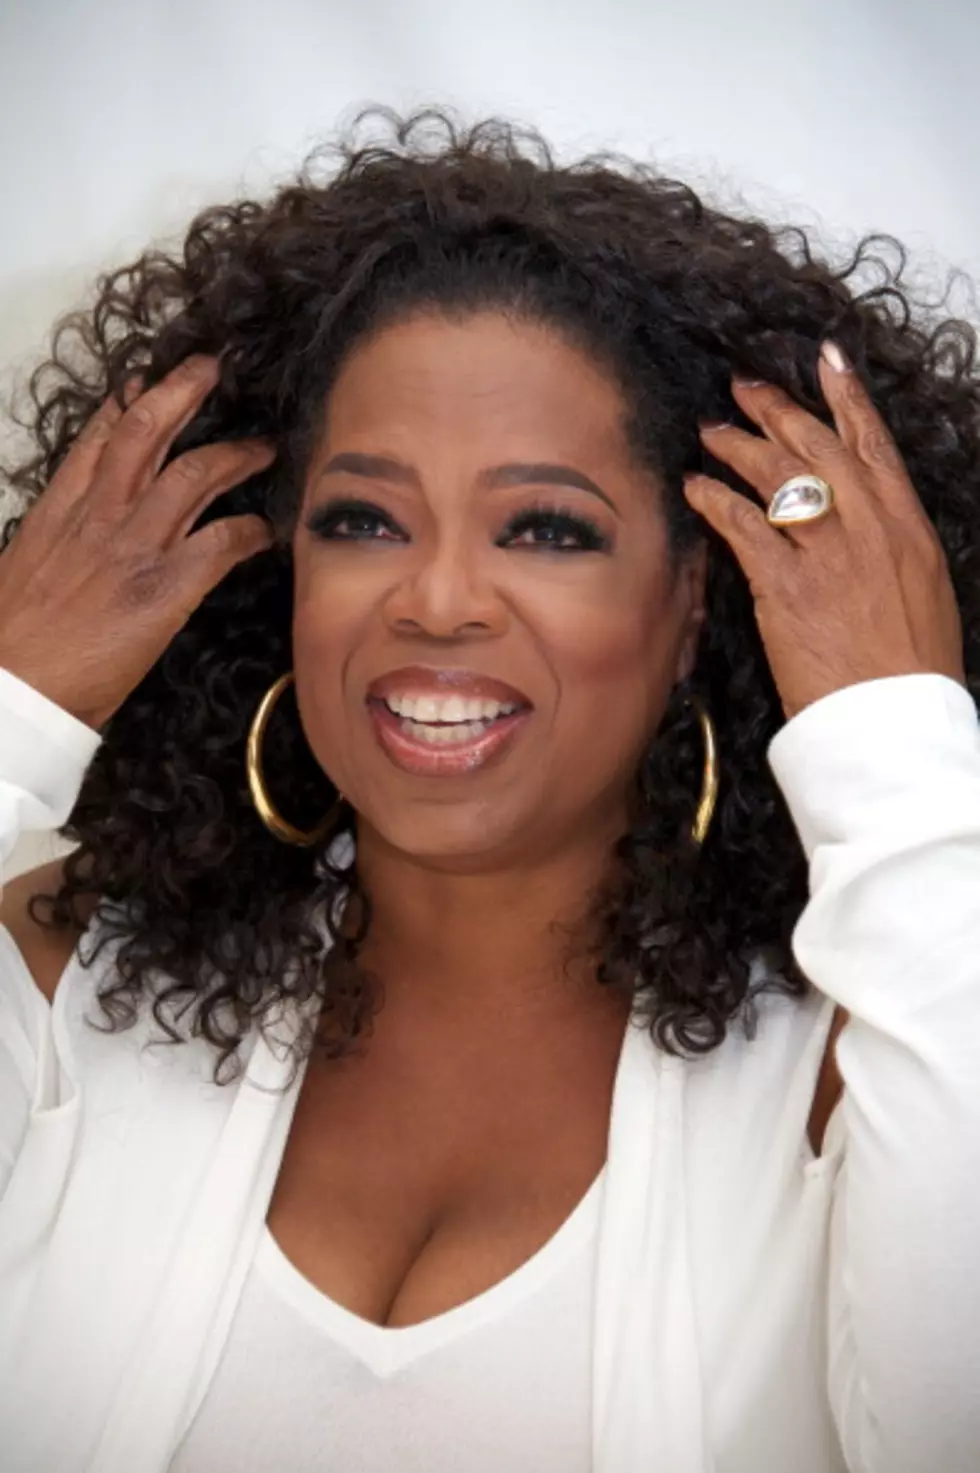 Big Crowds Expected At Oprah’s Yard Sale